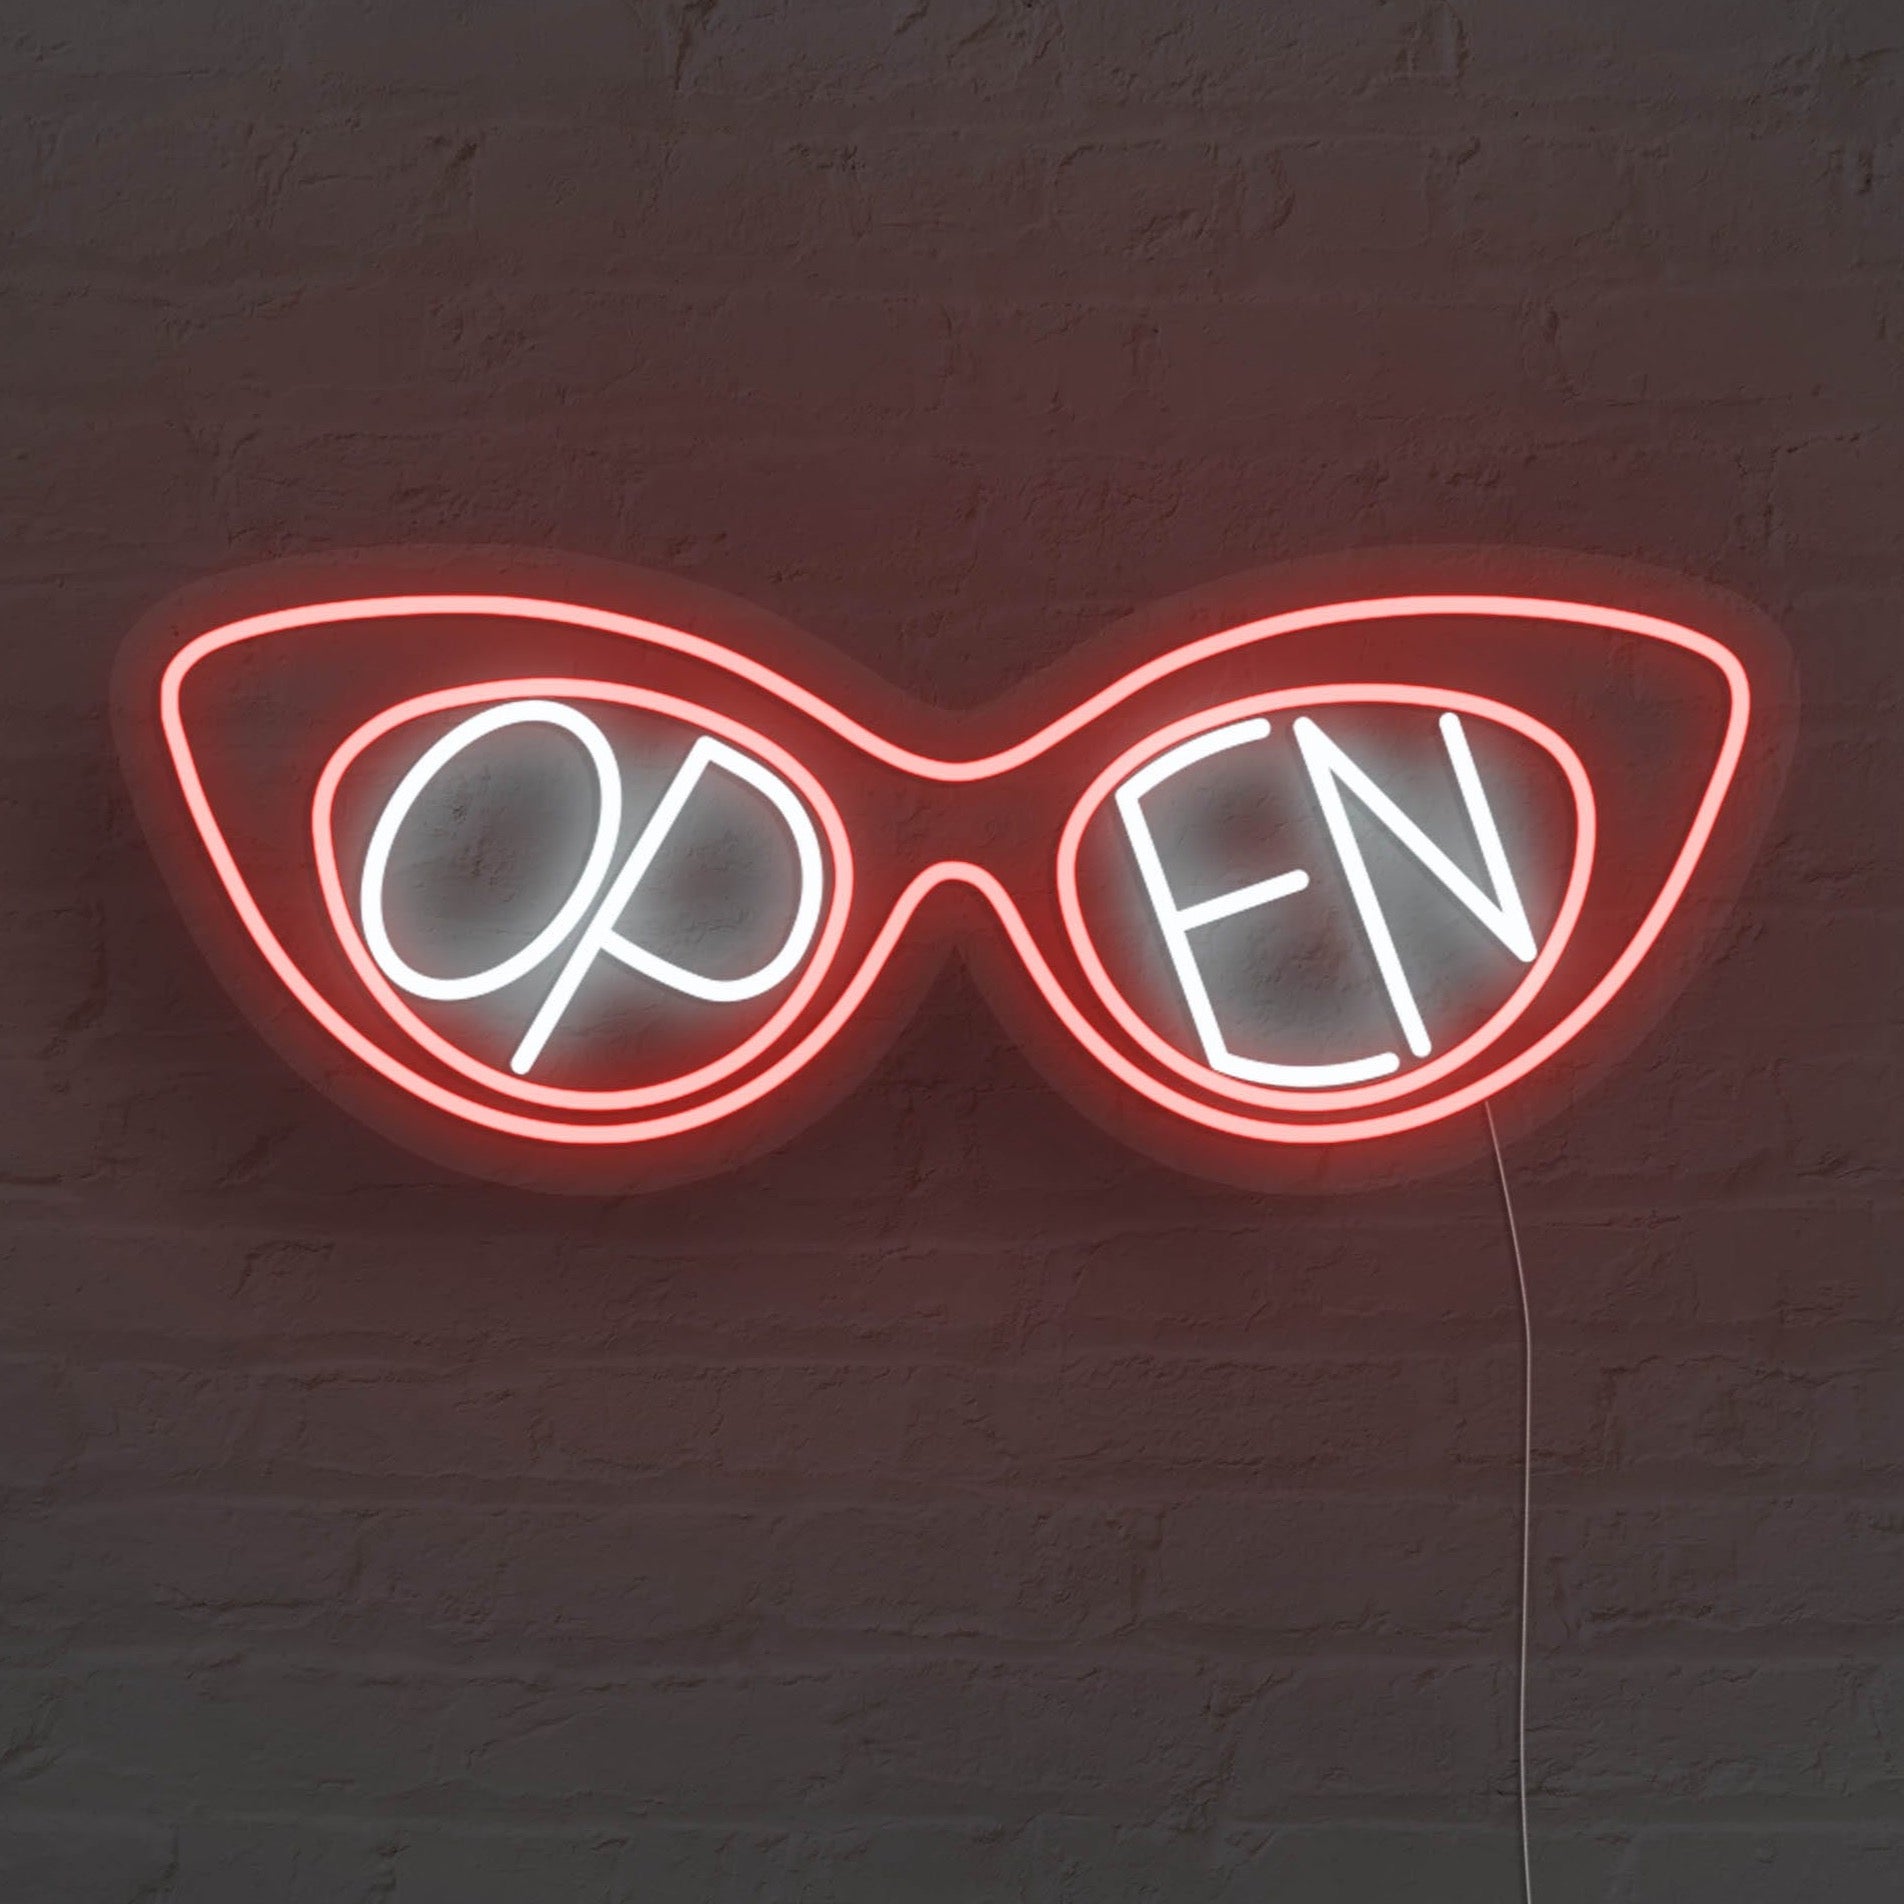 Sunglasses Open LED Neon Sign